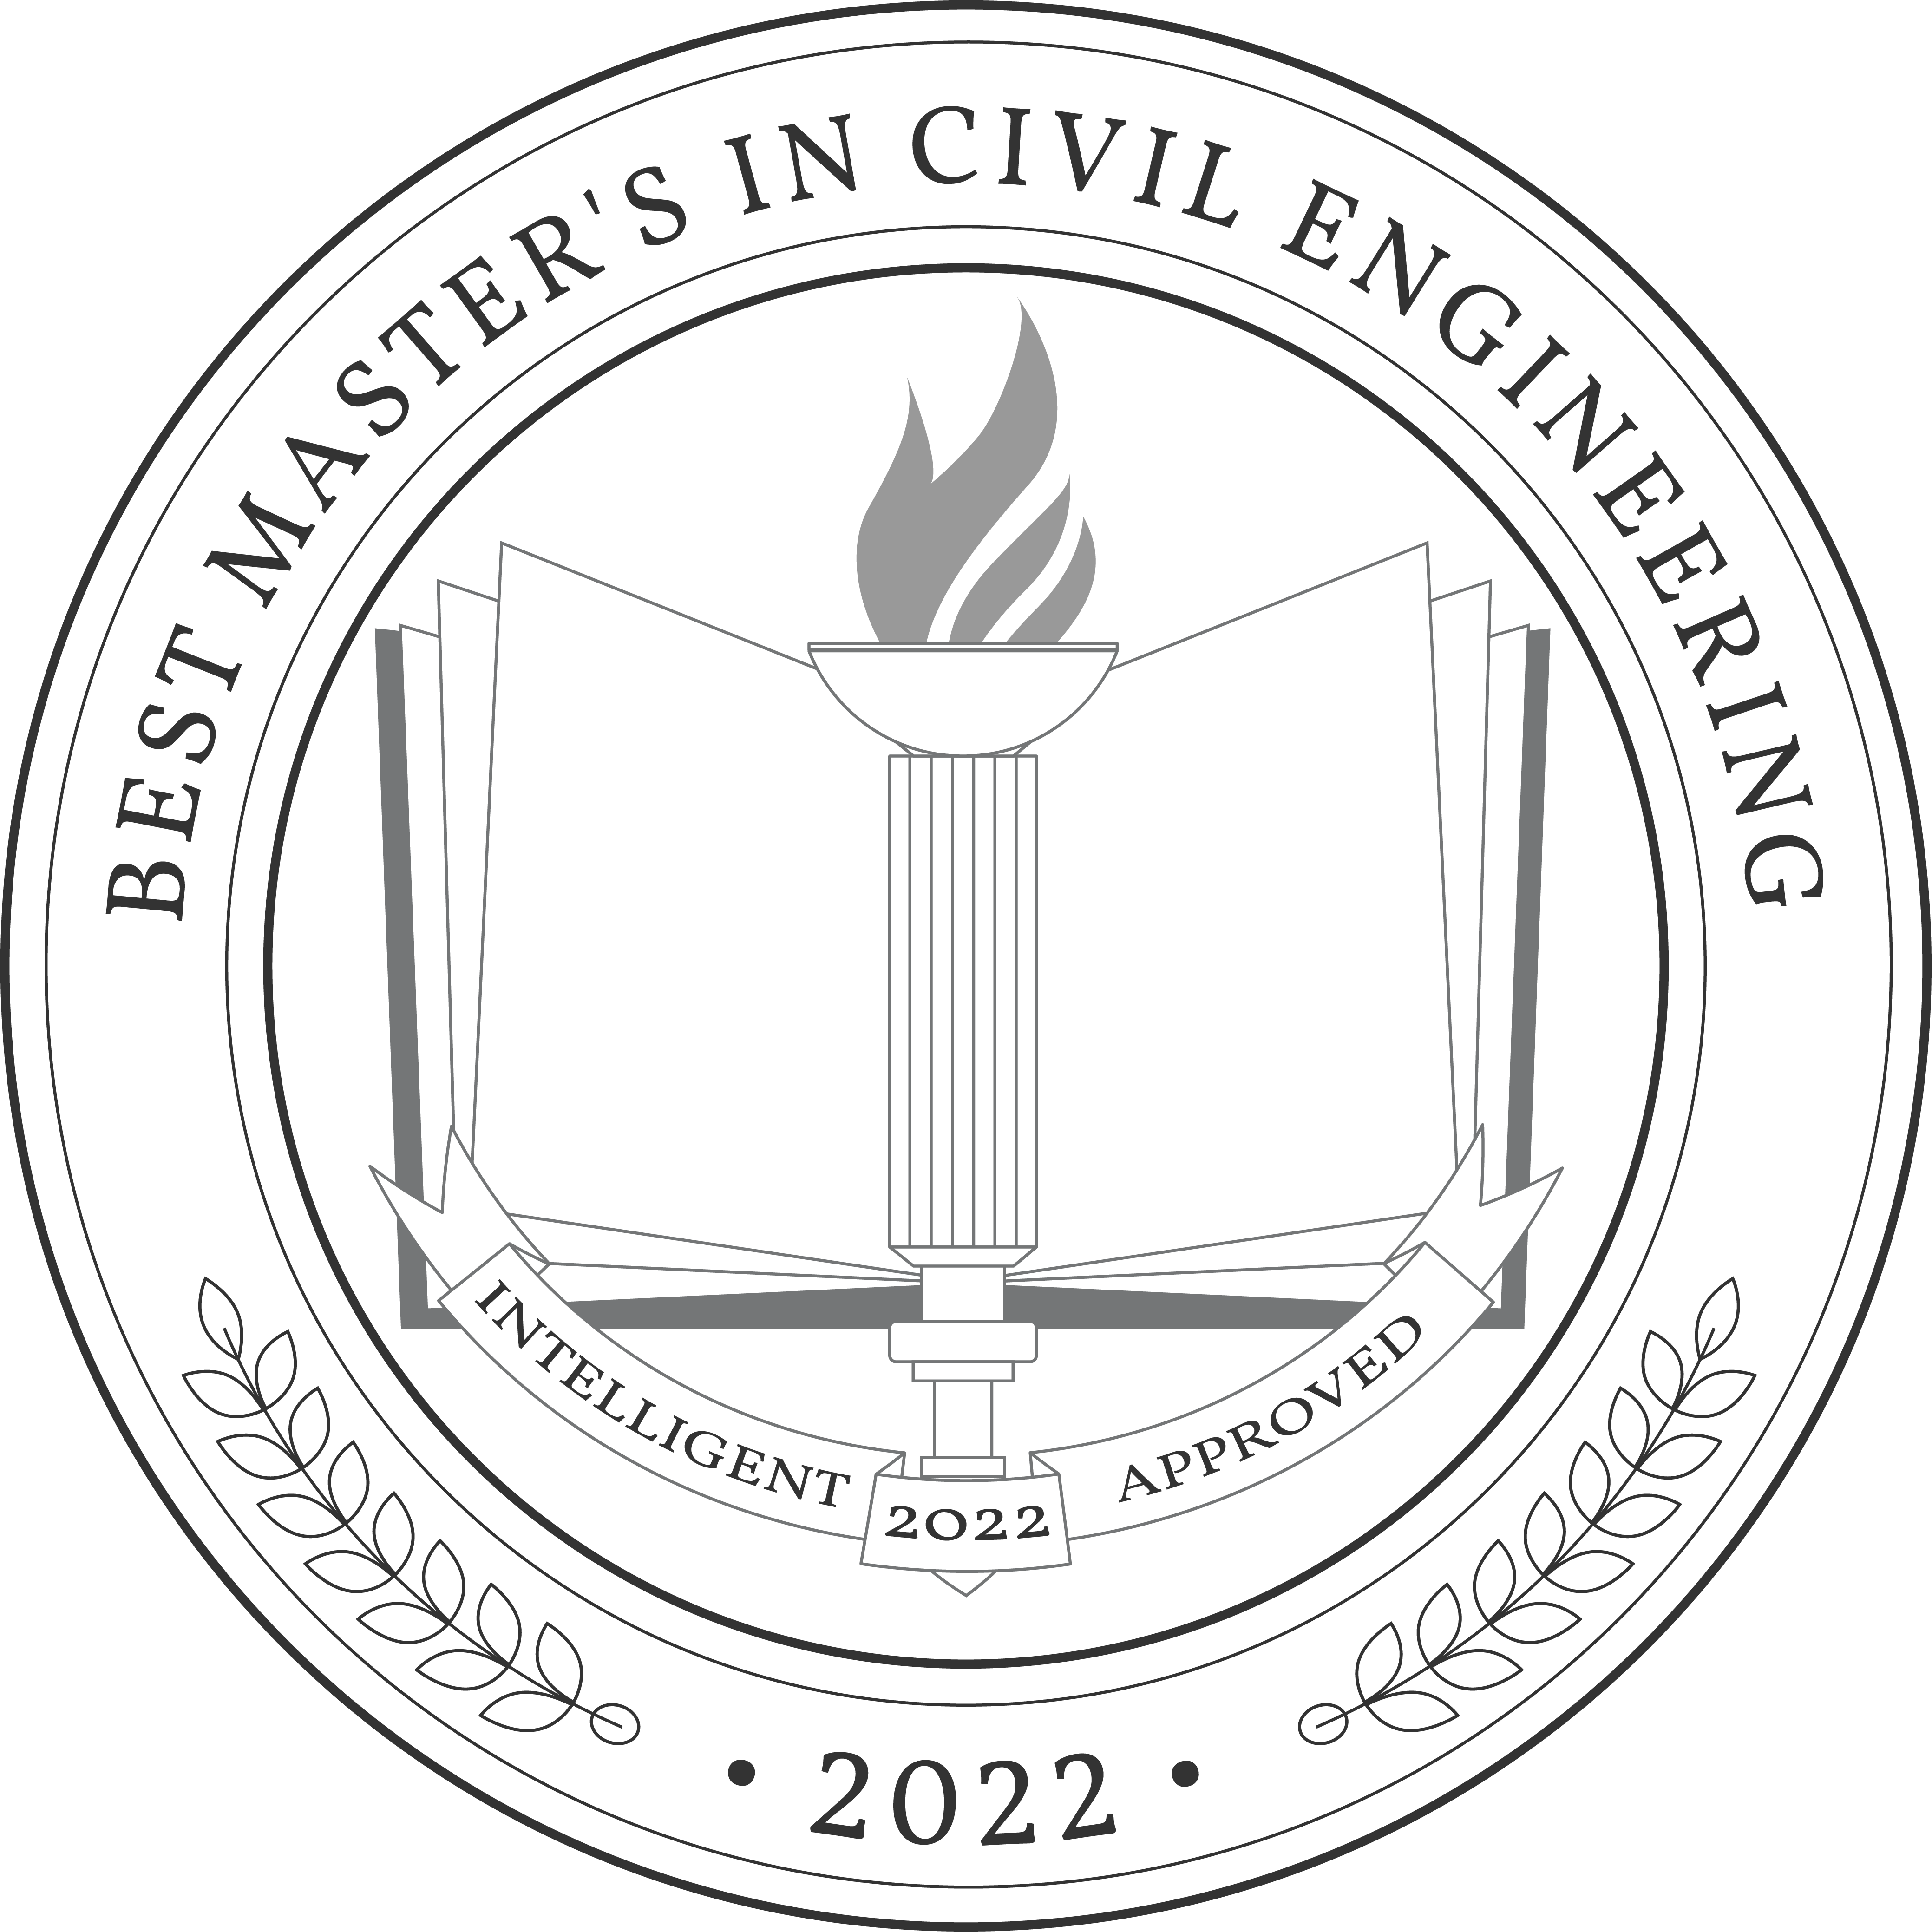 Best Master's in Civil Engineering Badge